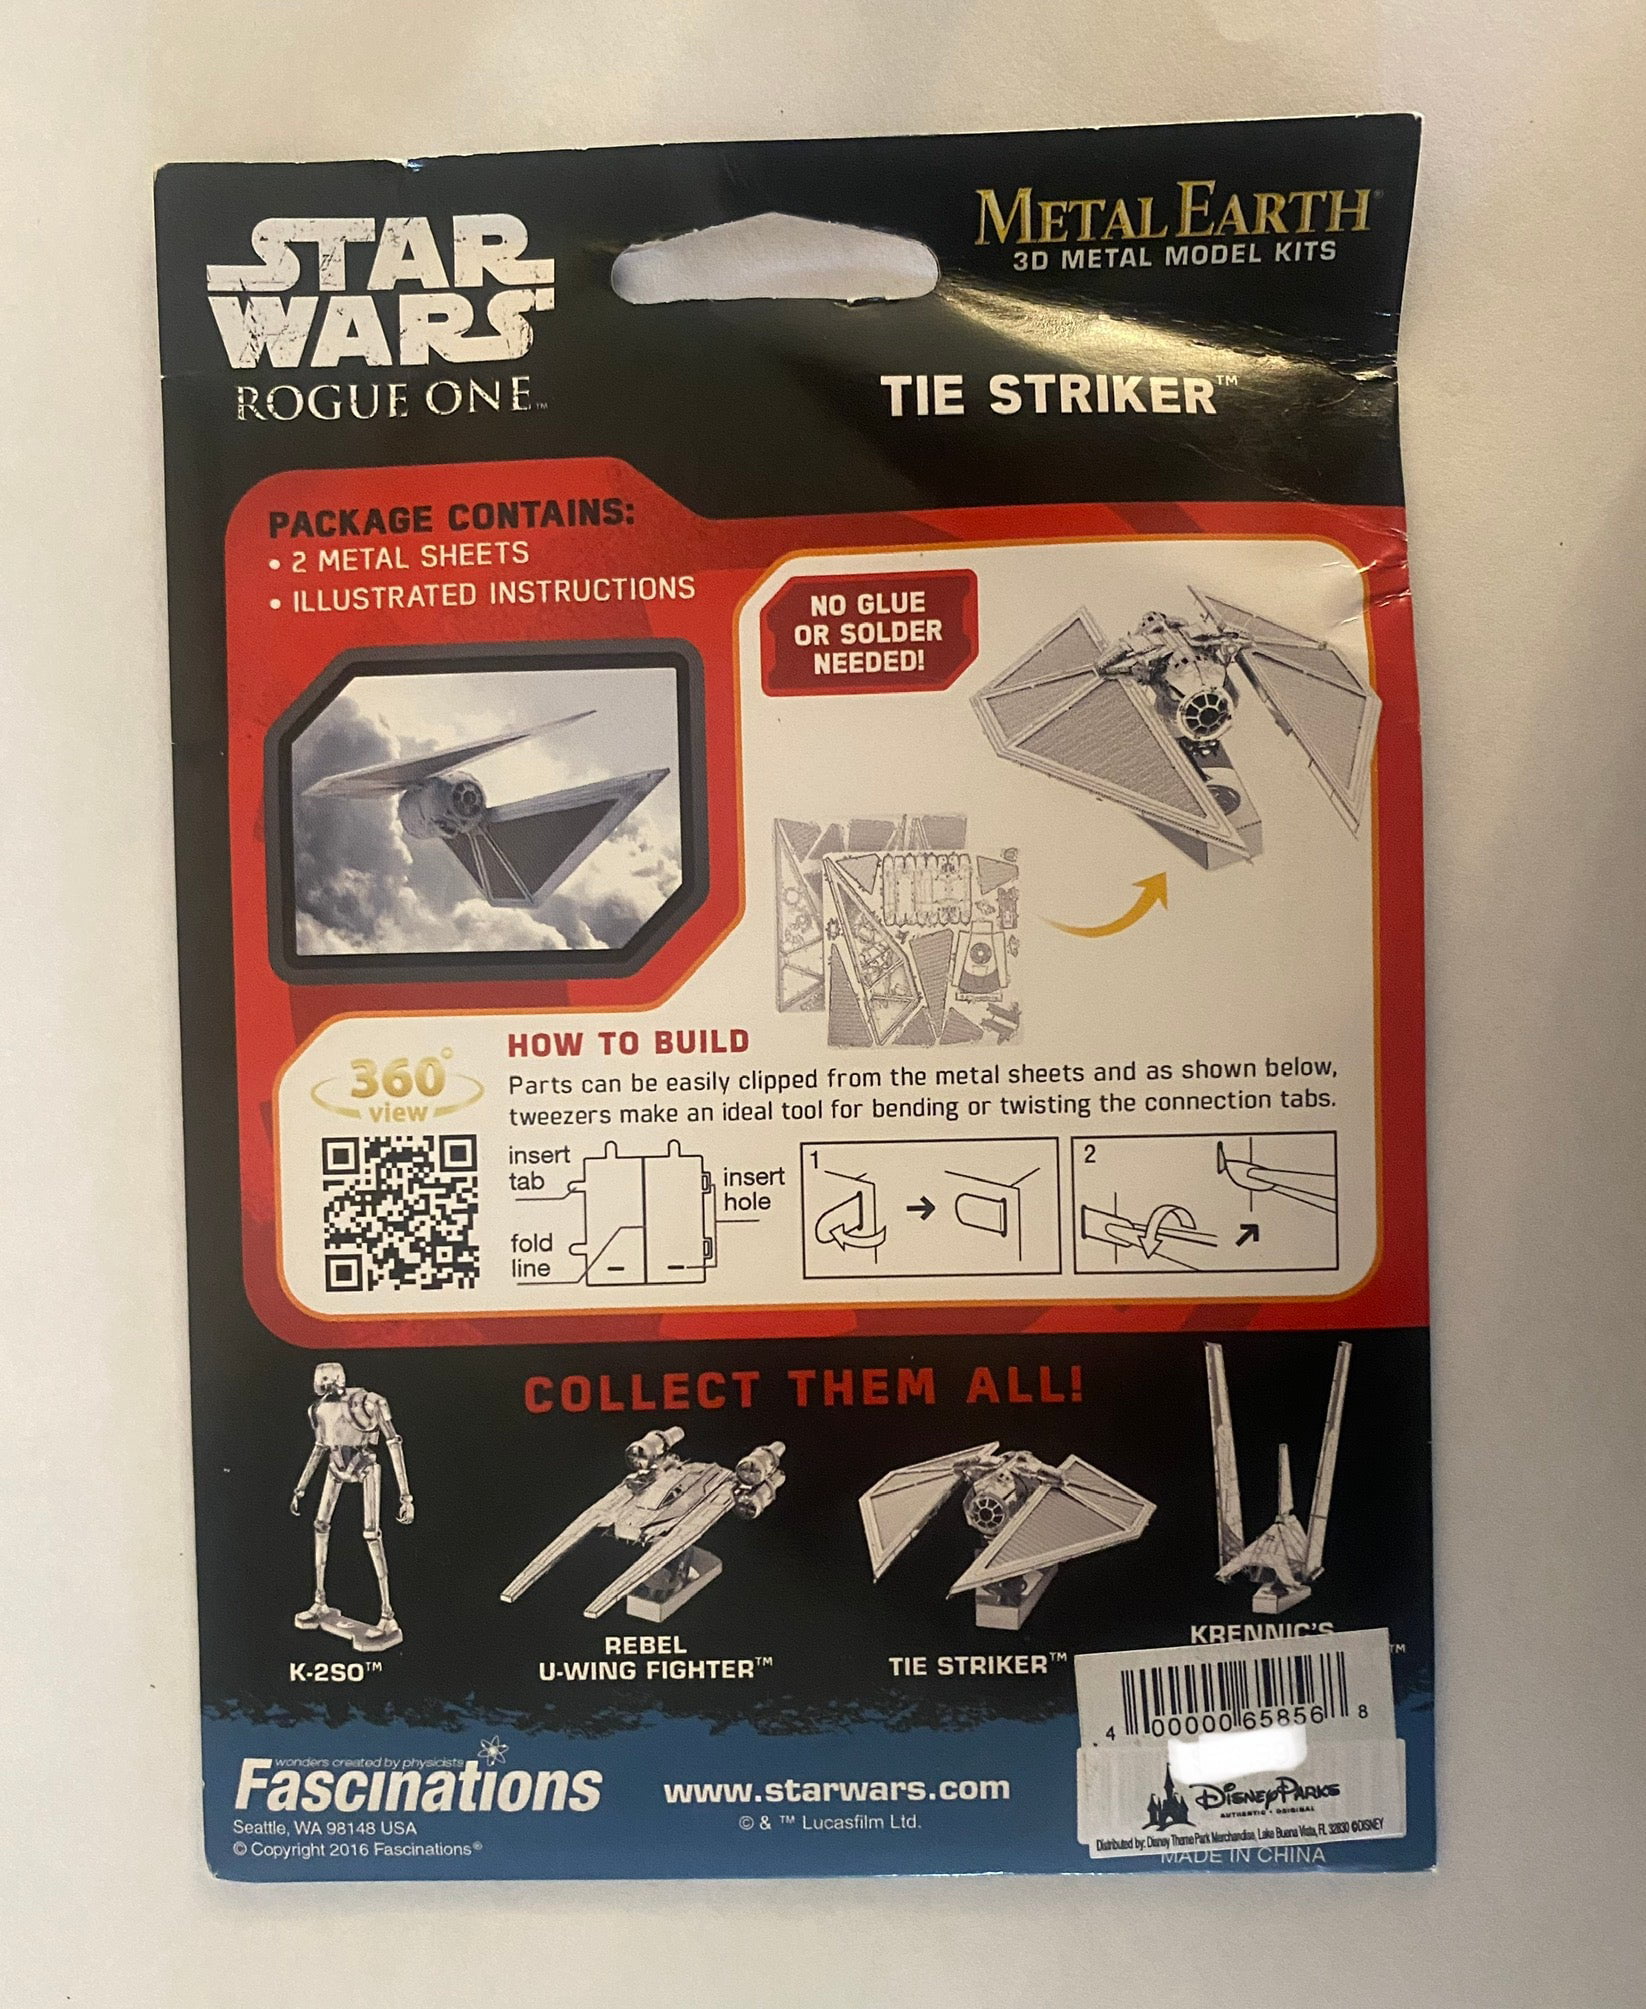 Fascinations Metal Earth 3D Metal Model Kit - Star Wars Rogue One K